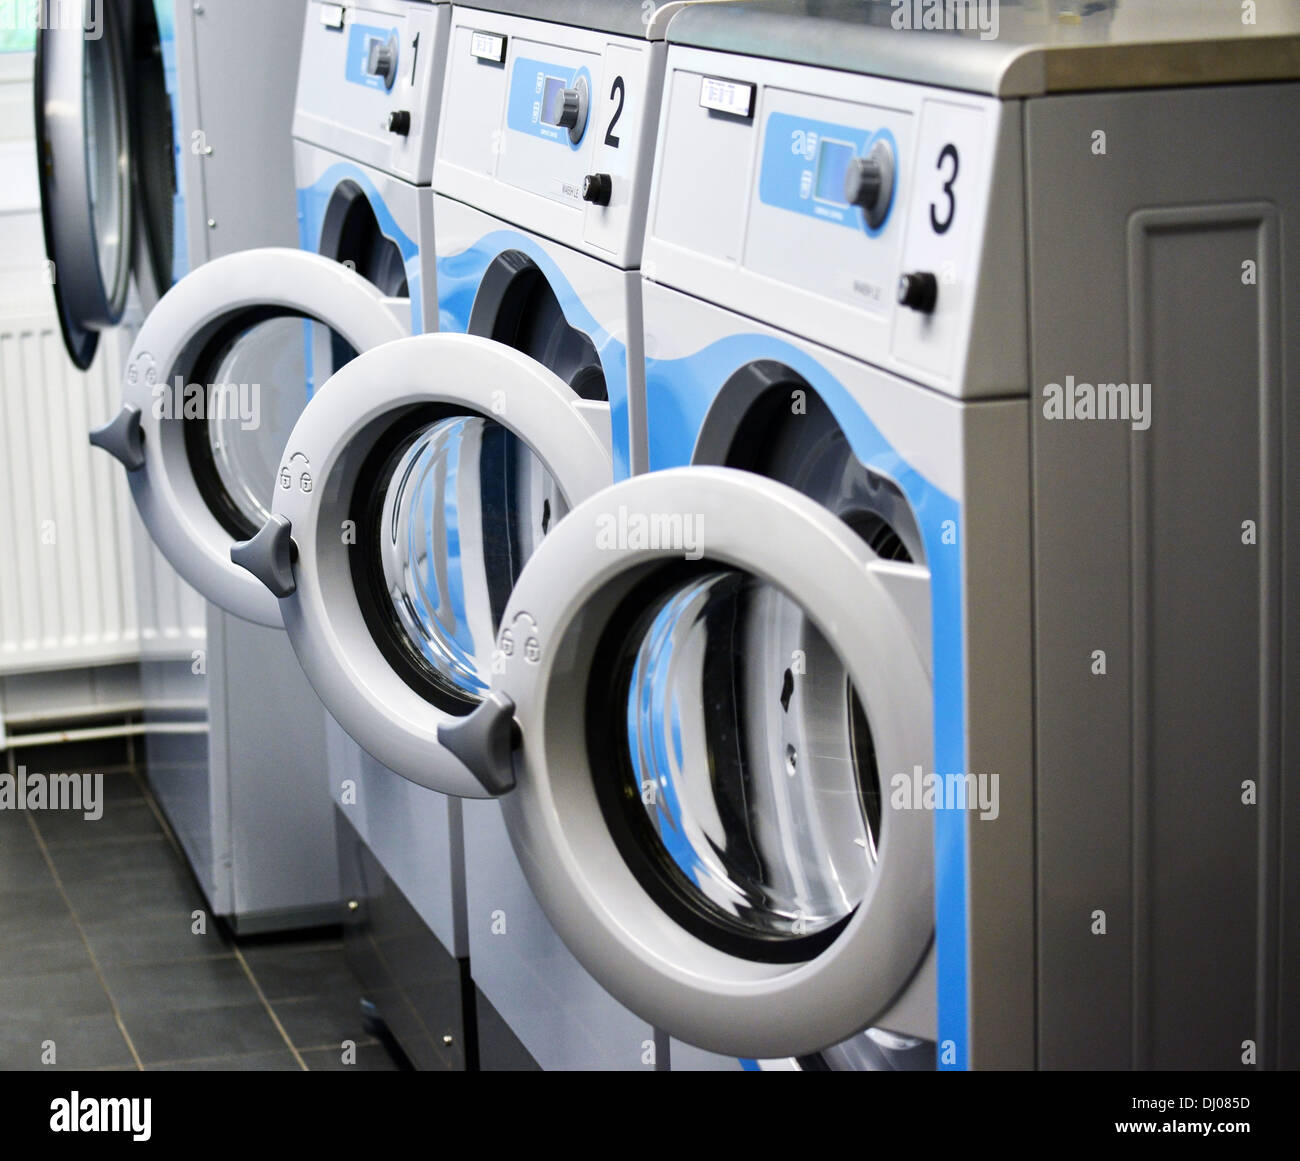 Room with washing machines Stock Photo